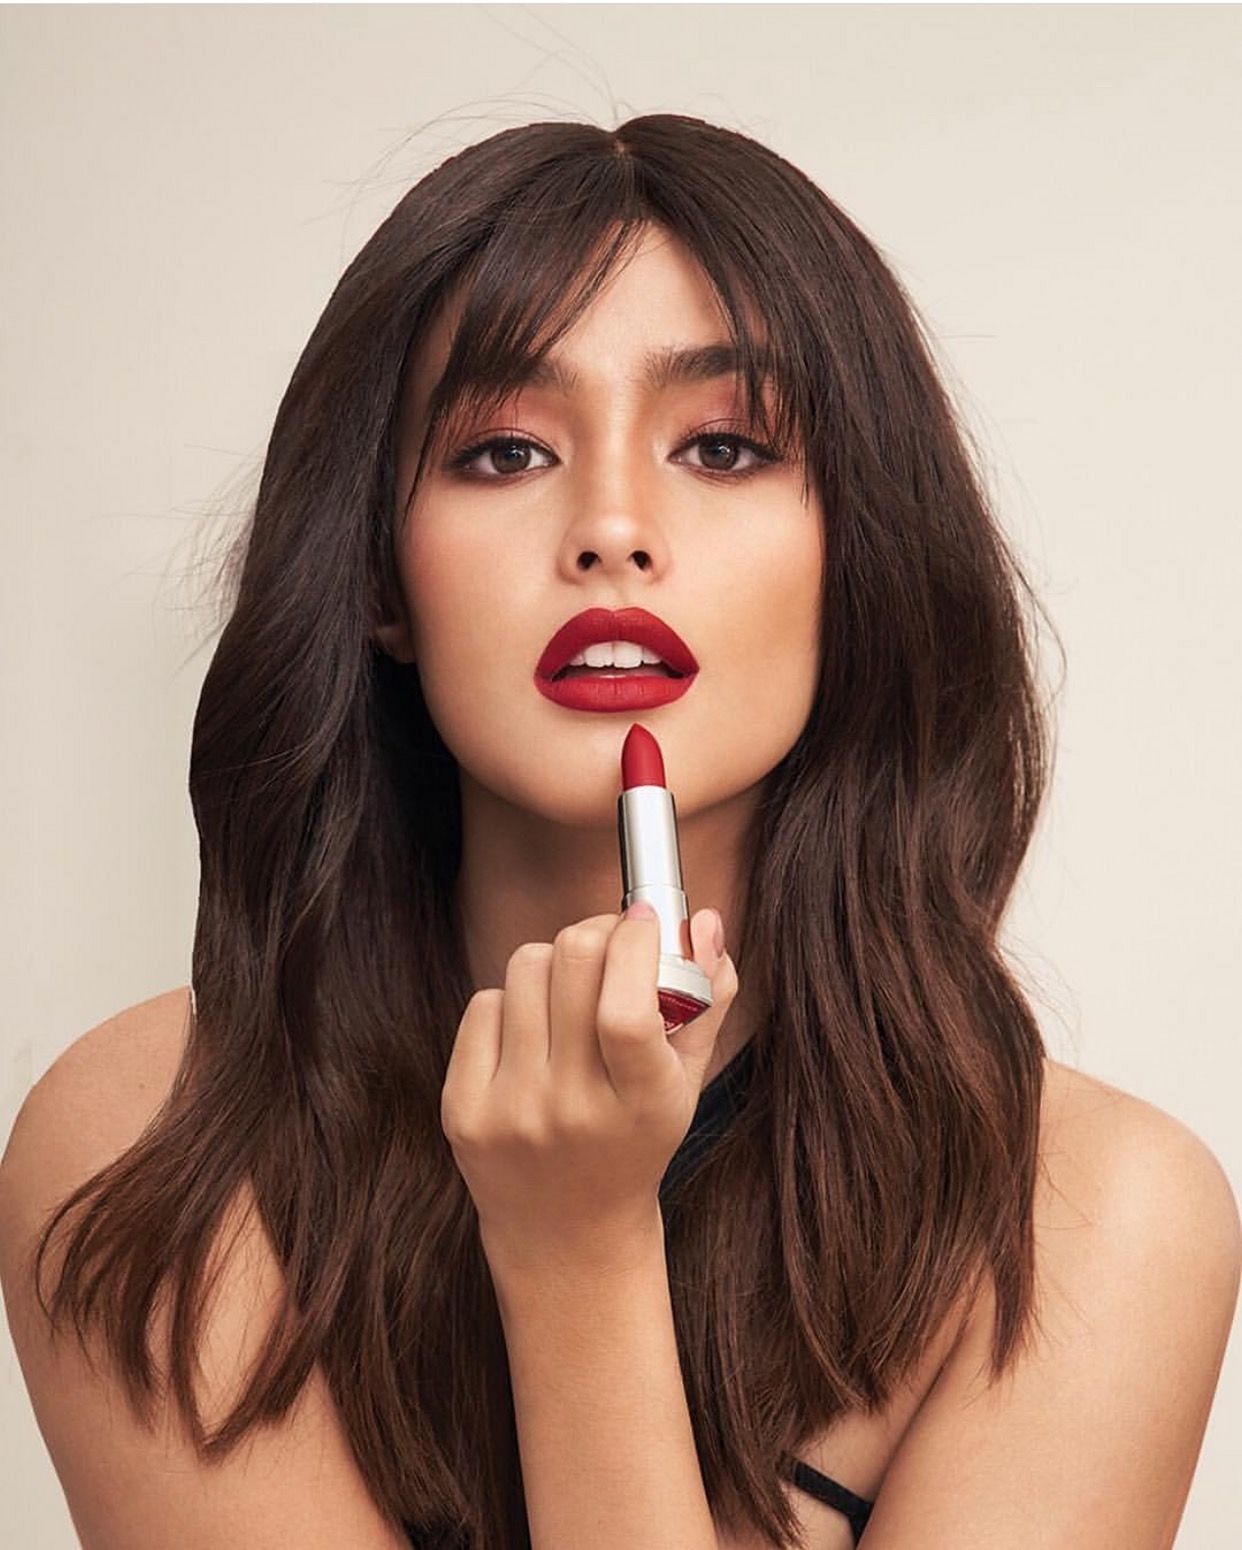 Red lipstick color from lizasoberano instagram